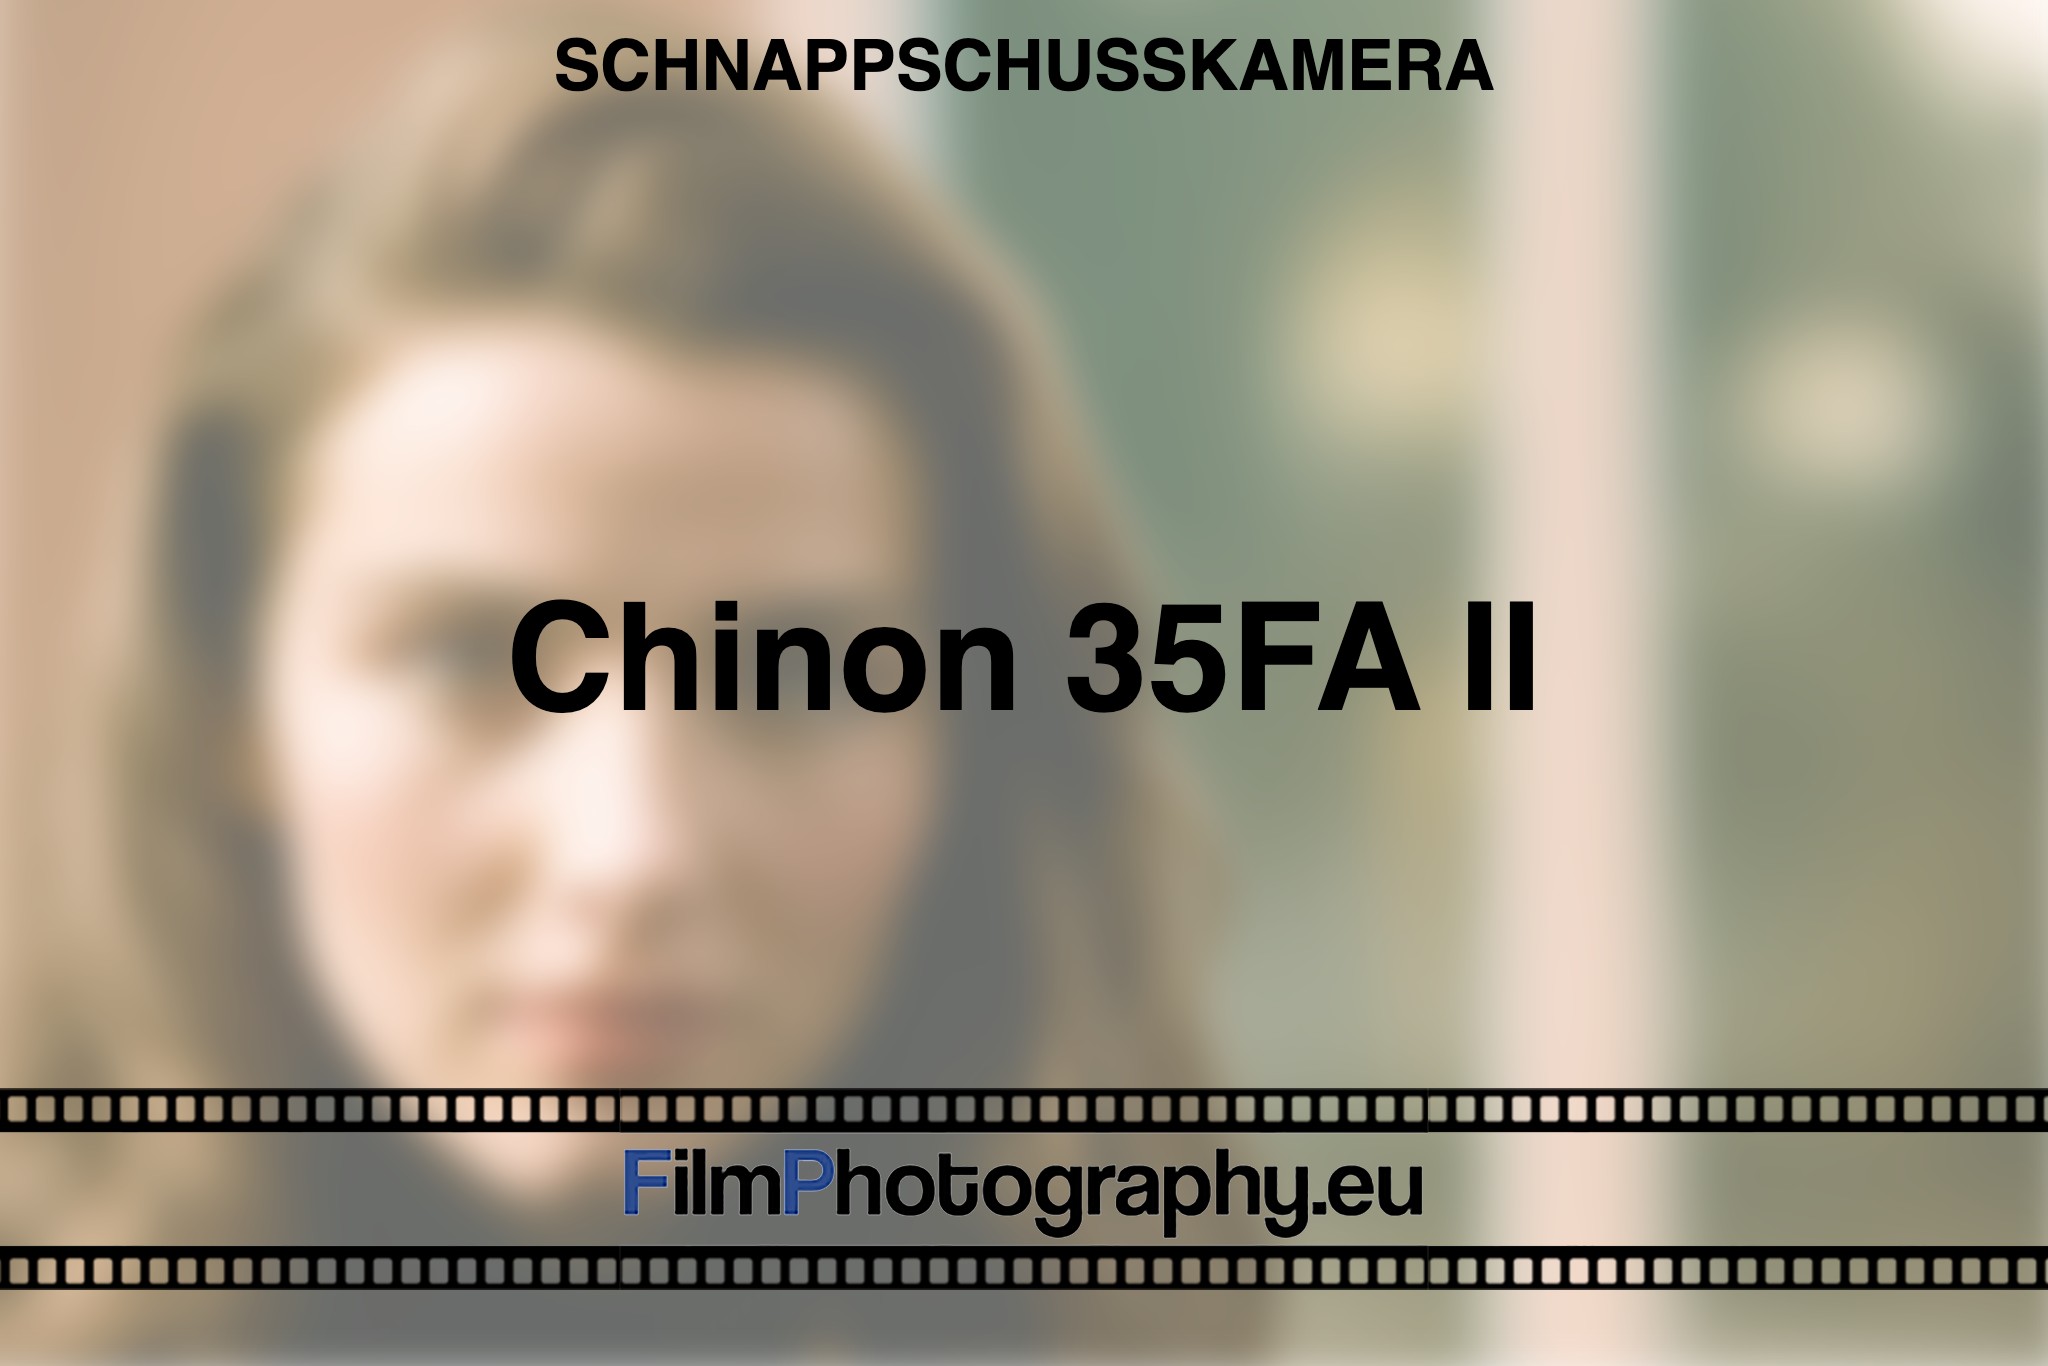 chinon-35fa-ii-schnappschusskamera-bnv